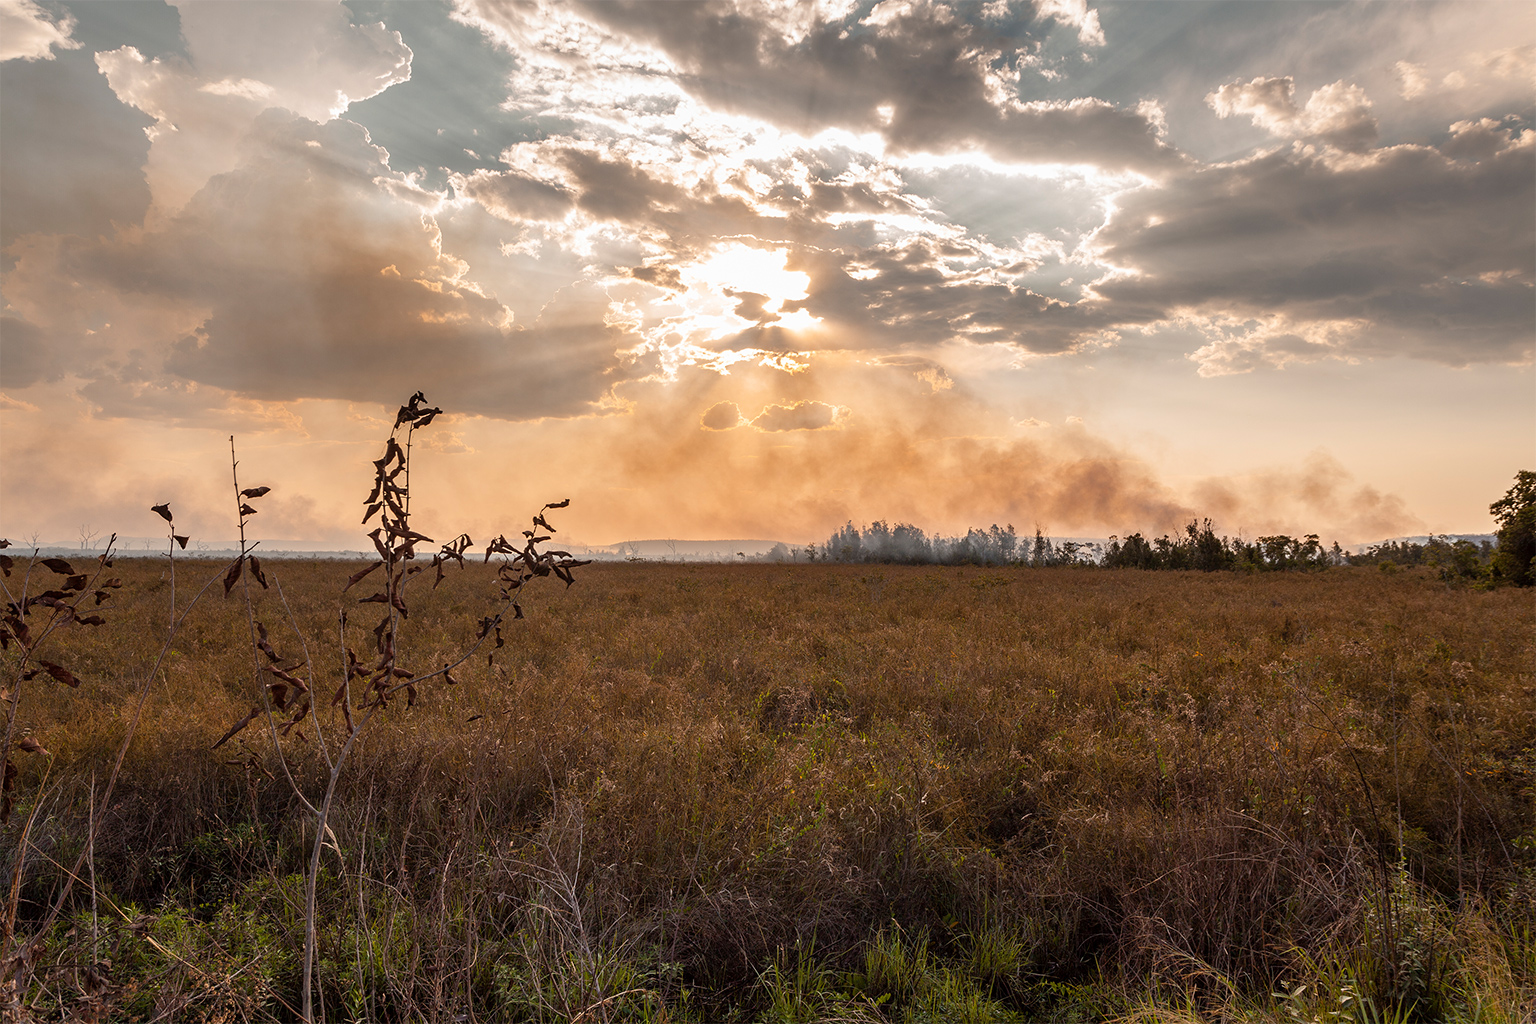 Smoke drifts across the horizon as fires tear through dry vegetation in the Pantanal.